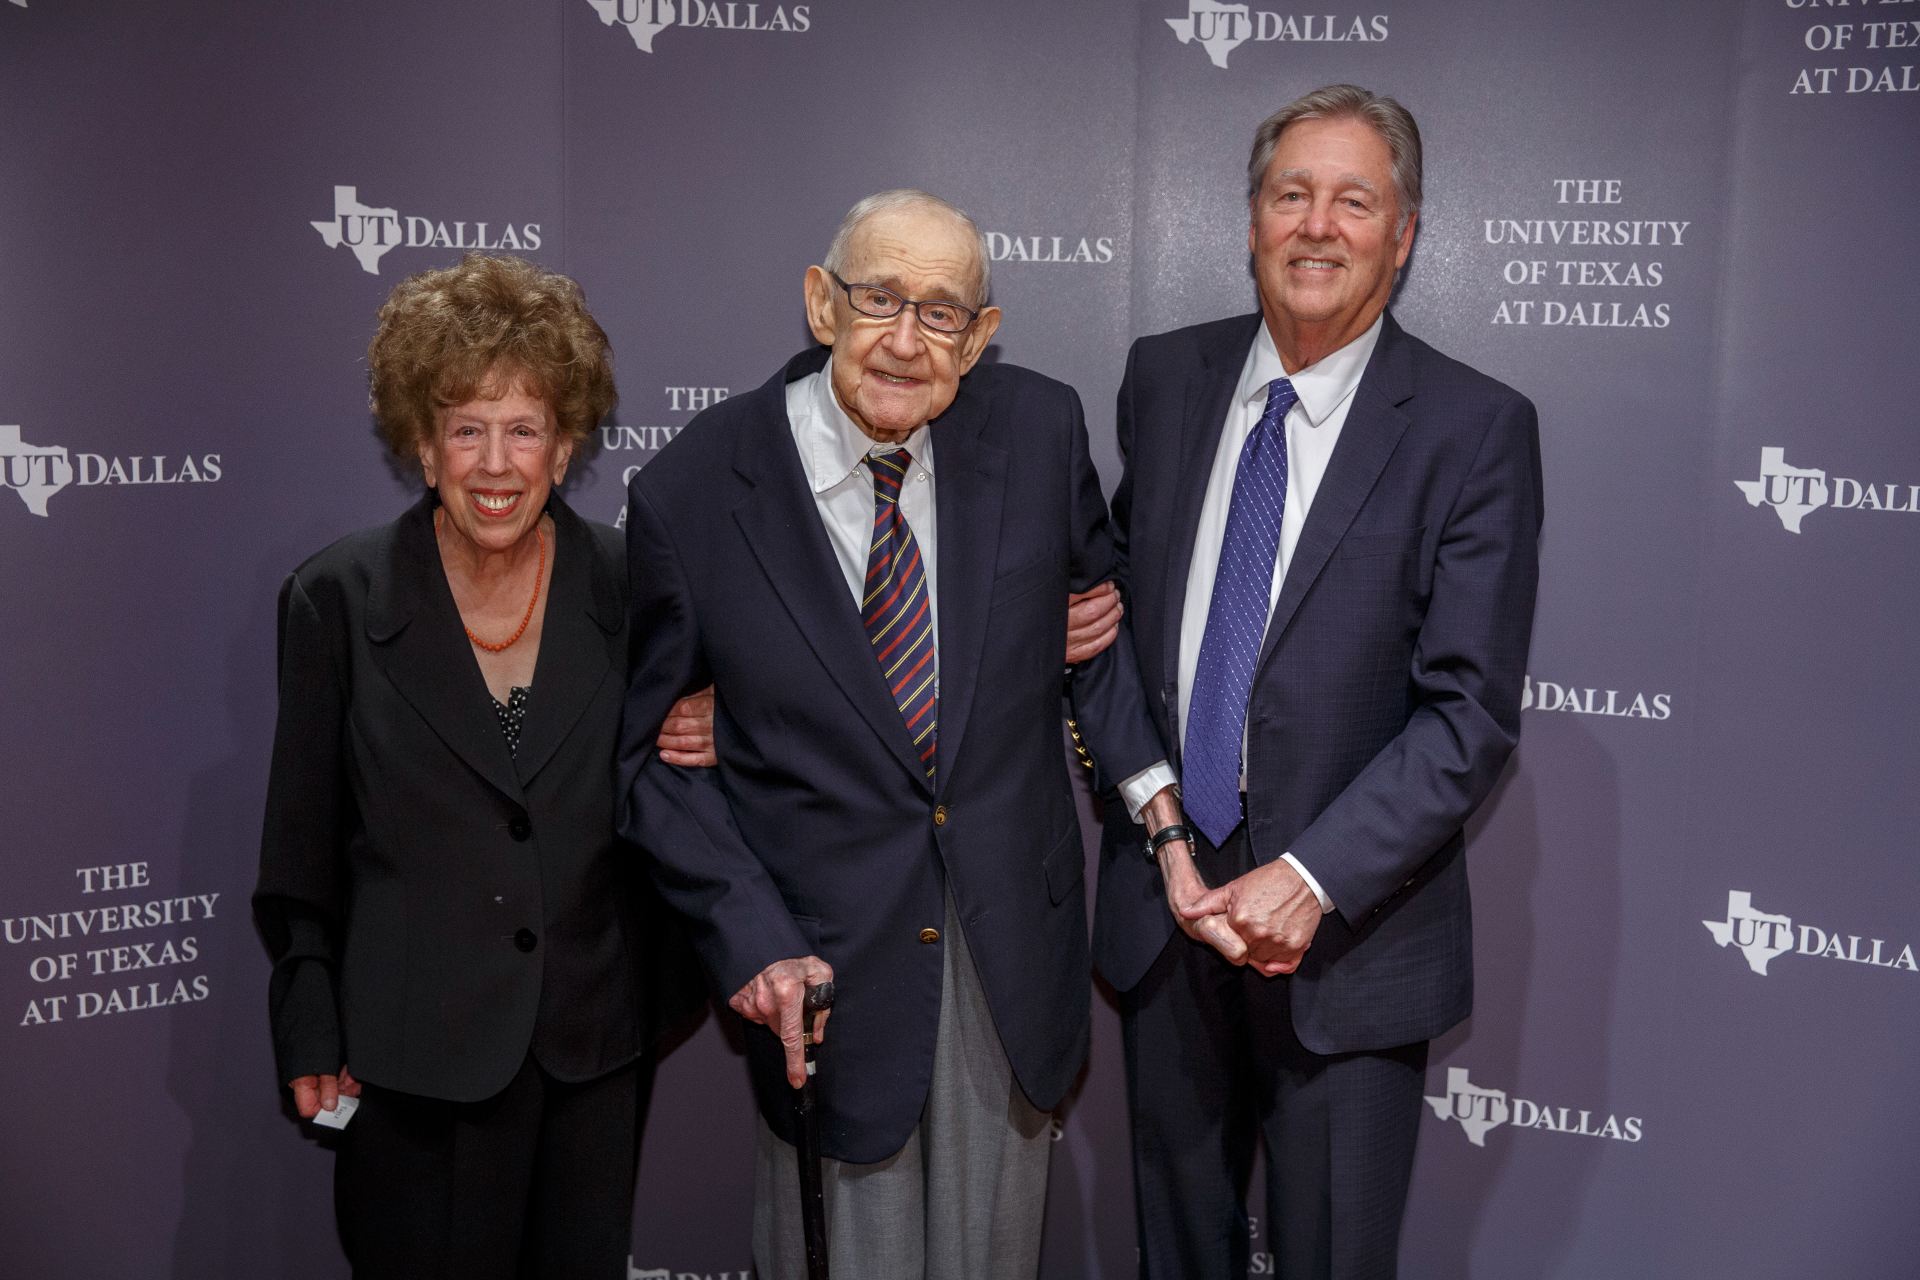 Dr. Zsuzsanna Ozsváth, Edward M. Ackerman and Dr. Hobson Wildenthal (right) at the 2016 UT Dallas Awards gala.